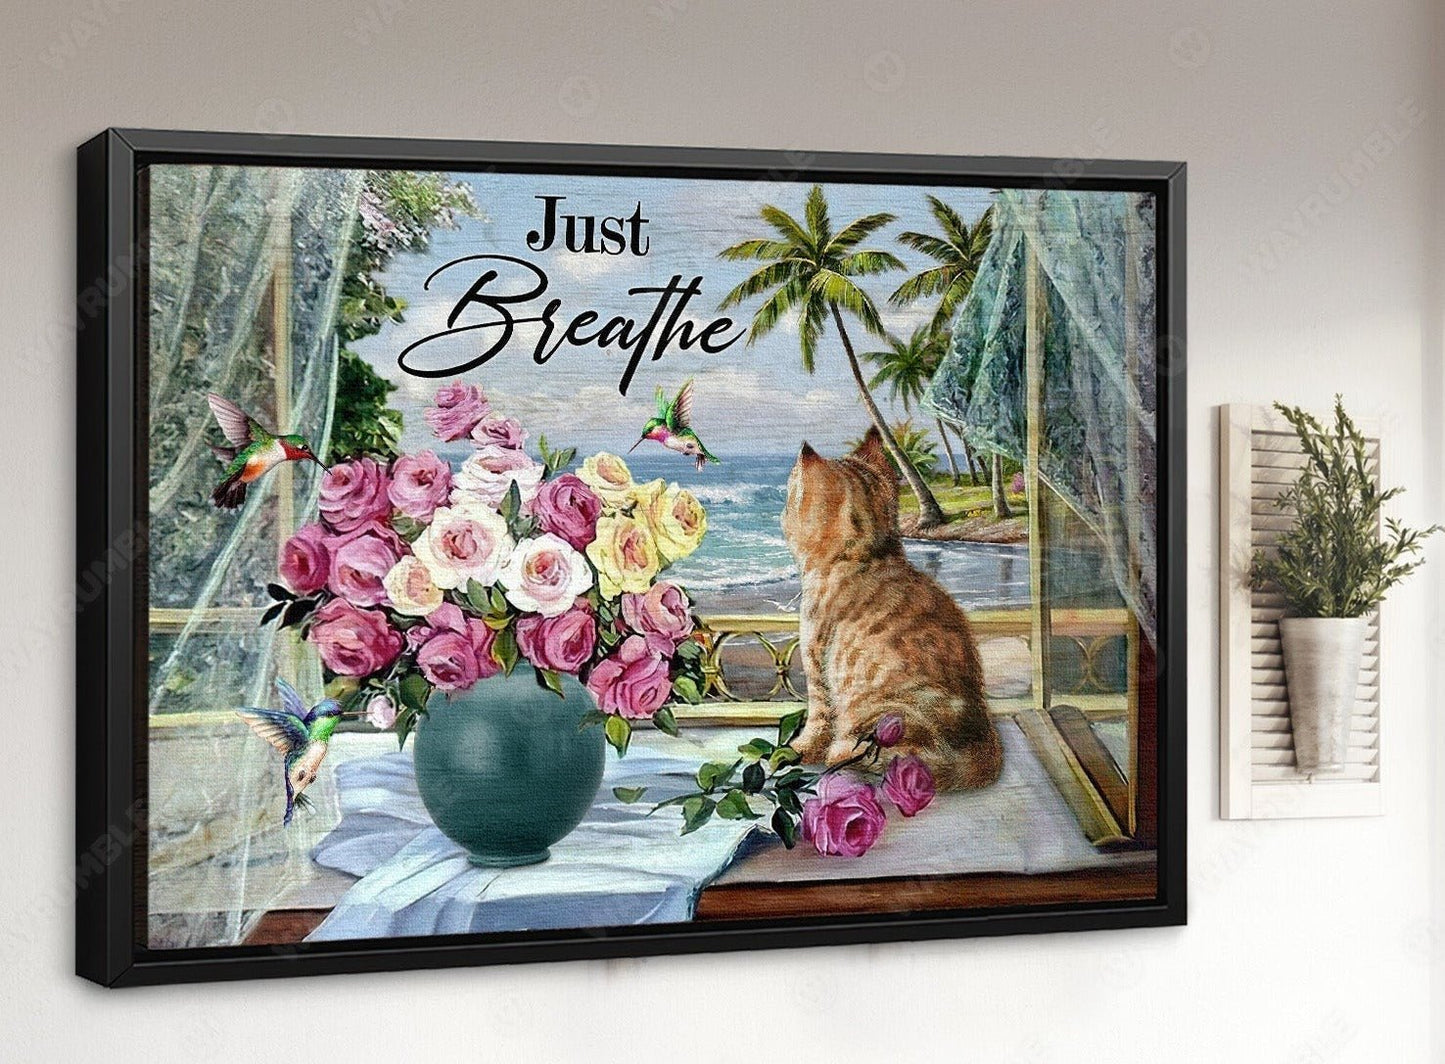 Pink rose vase, Dream cat, Beach painting, Hummingbird, Just breathe - Jesus Landscape Canvas Prints, Christian Wall Art